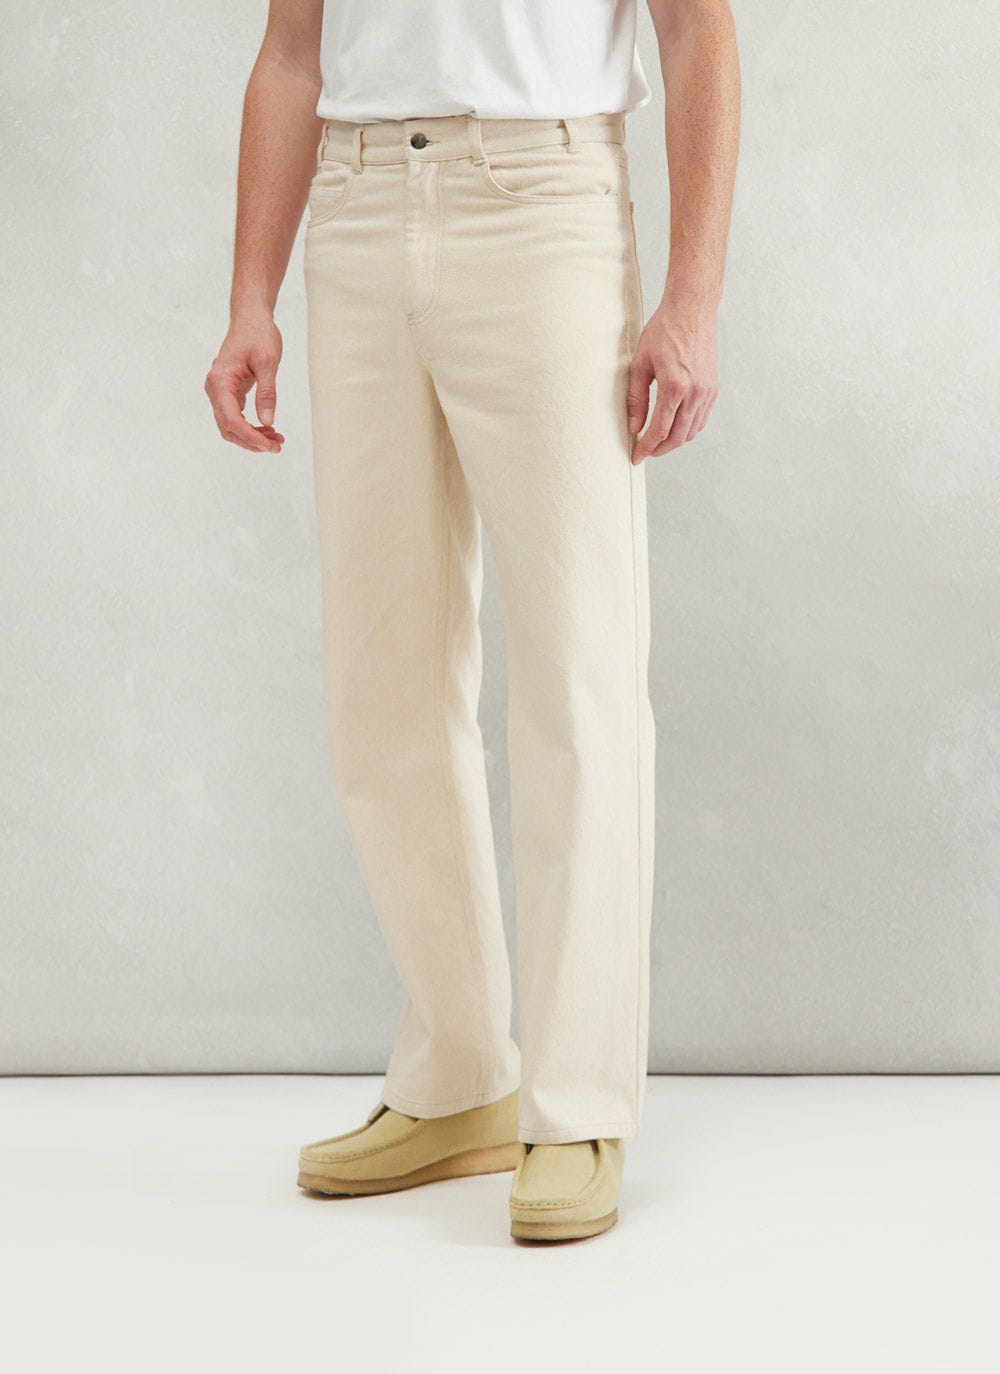 Men's 5 Pocket Trouser | Ecru Cream Twill | Percival Menswear